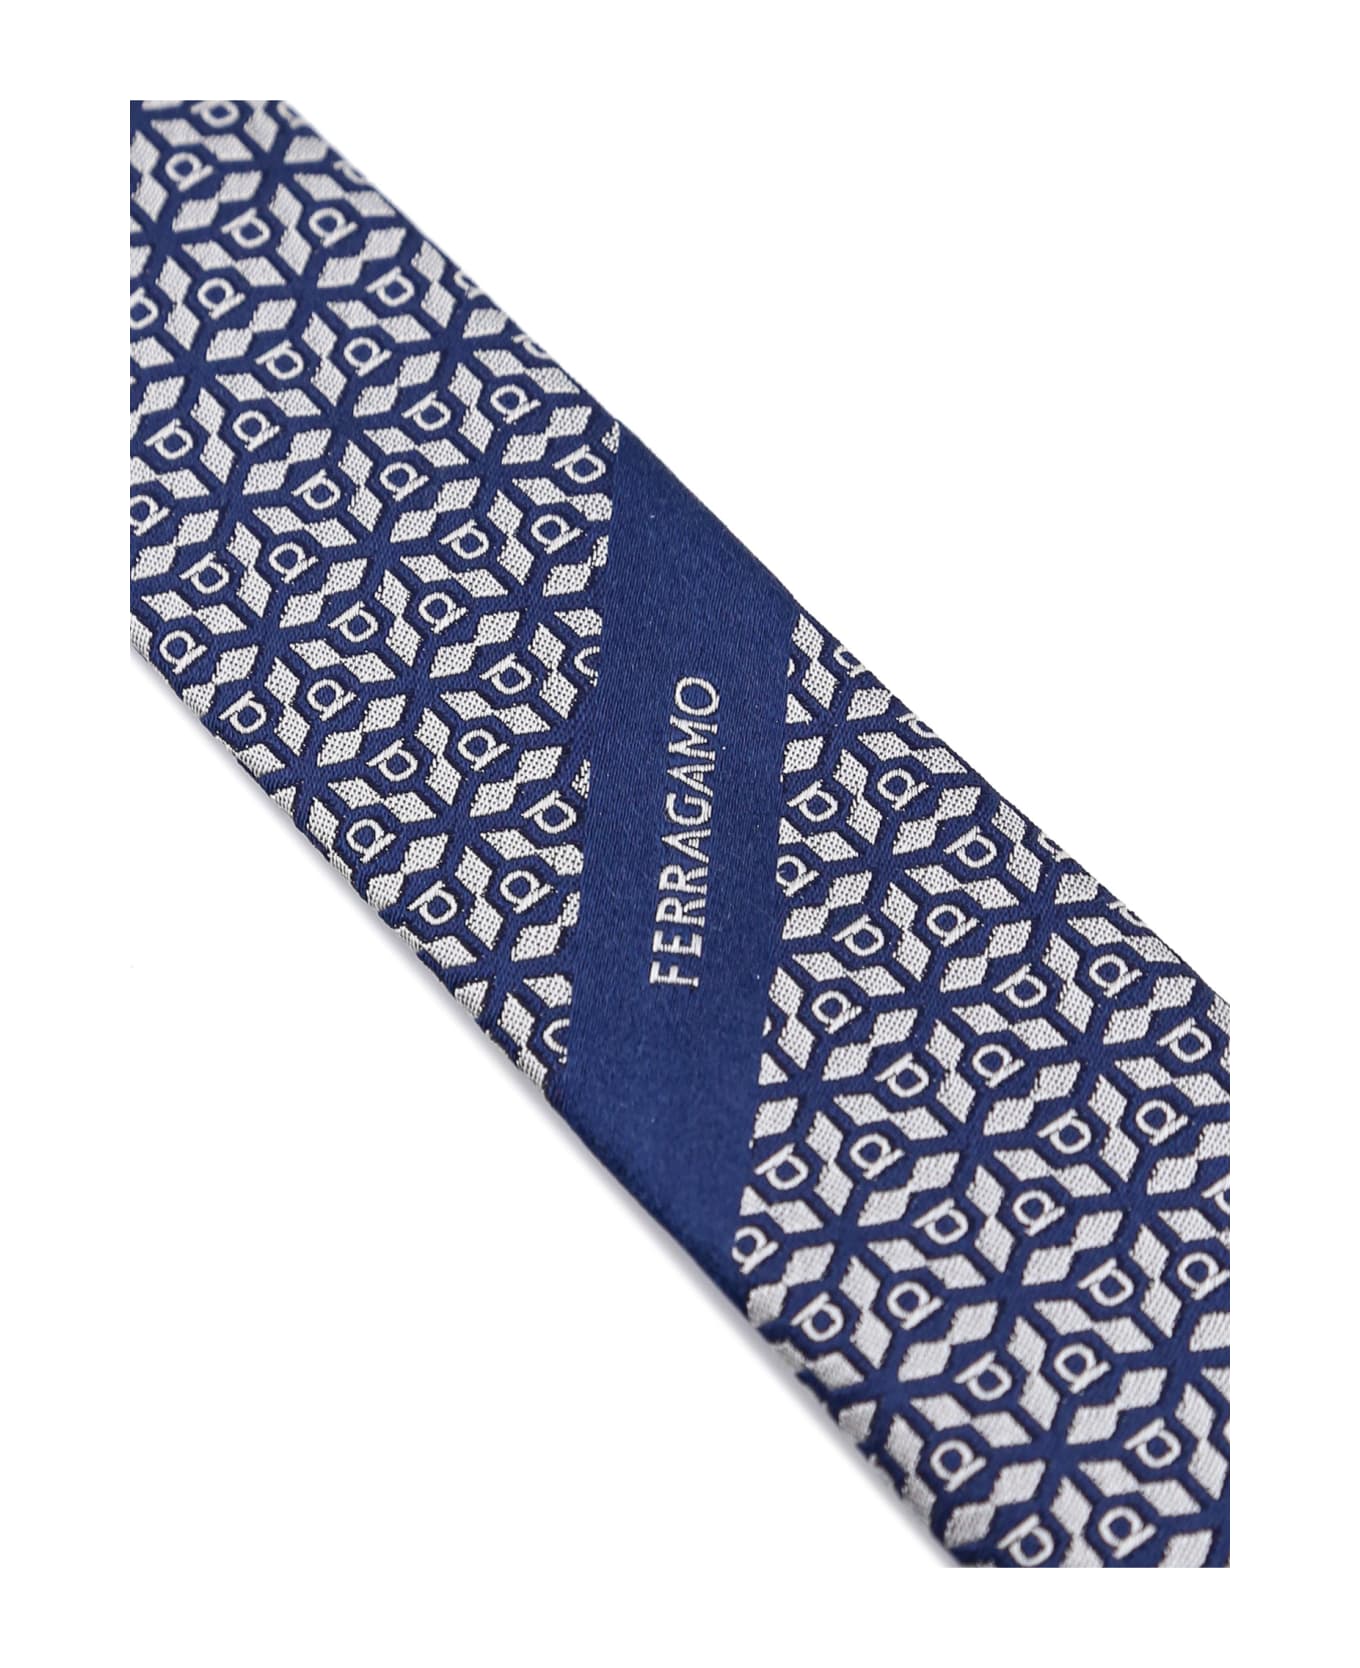 Ferragamo Tie - Blue ネクタイ